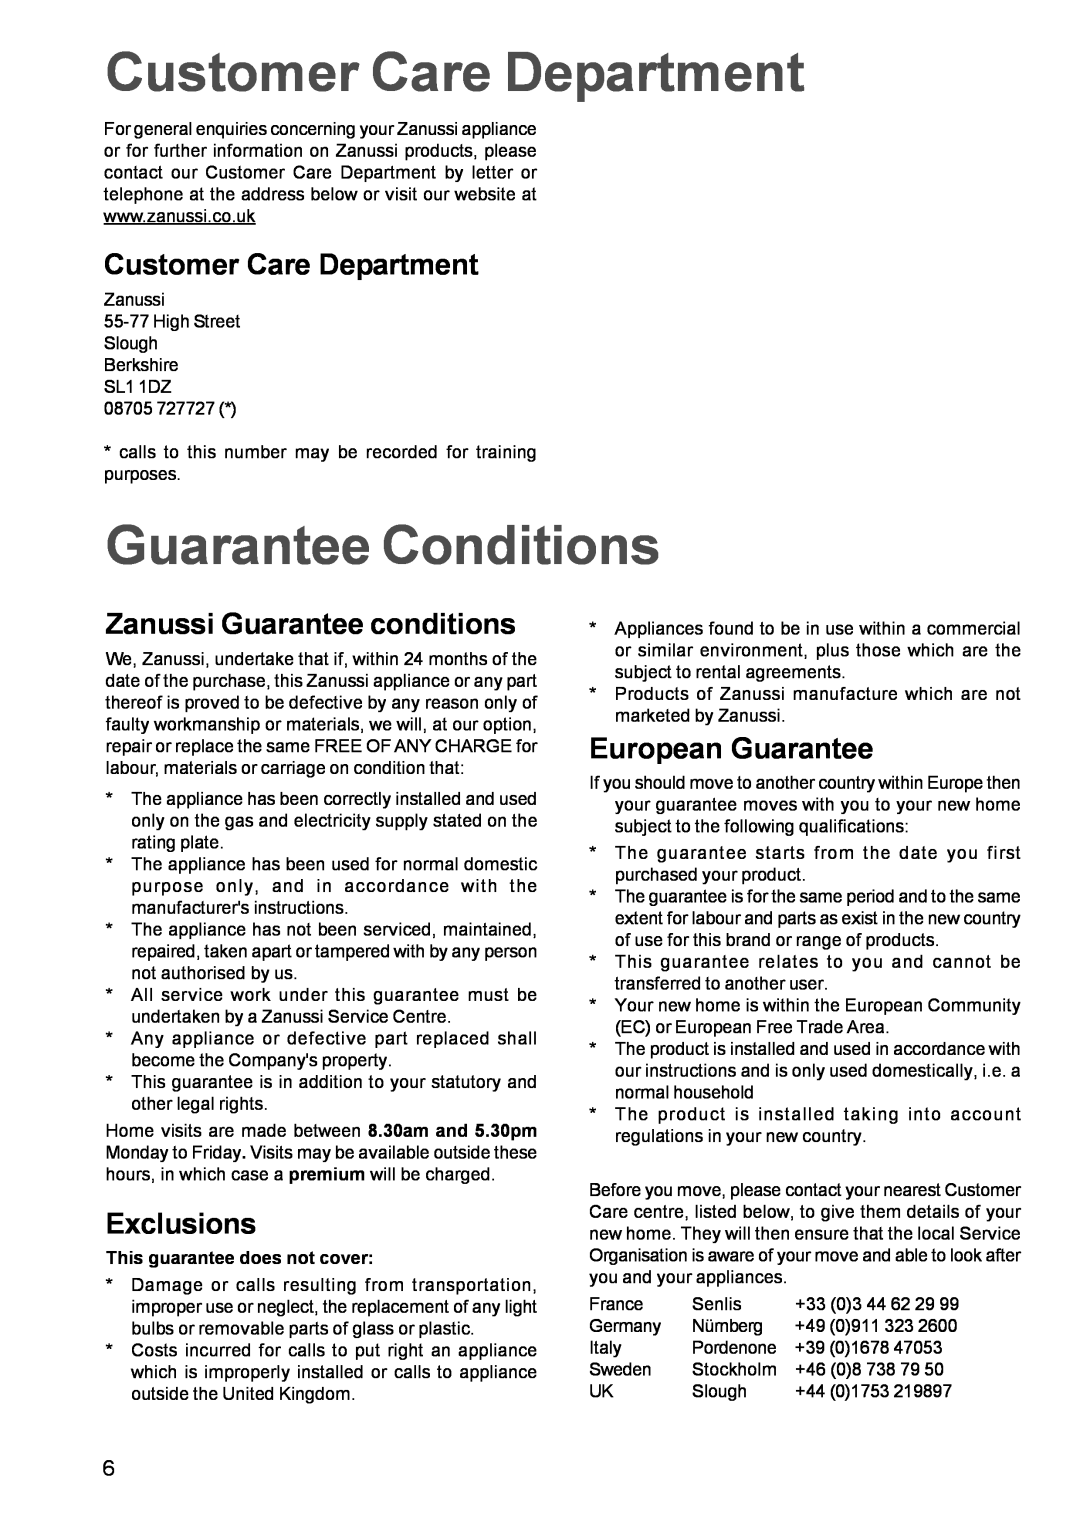 Zanussi ZGG642C manual Customer Care Department, Guarantee Conditions, Zanussi Guarantee conditions, Exclusions 